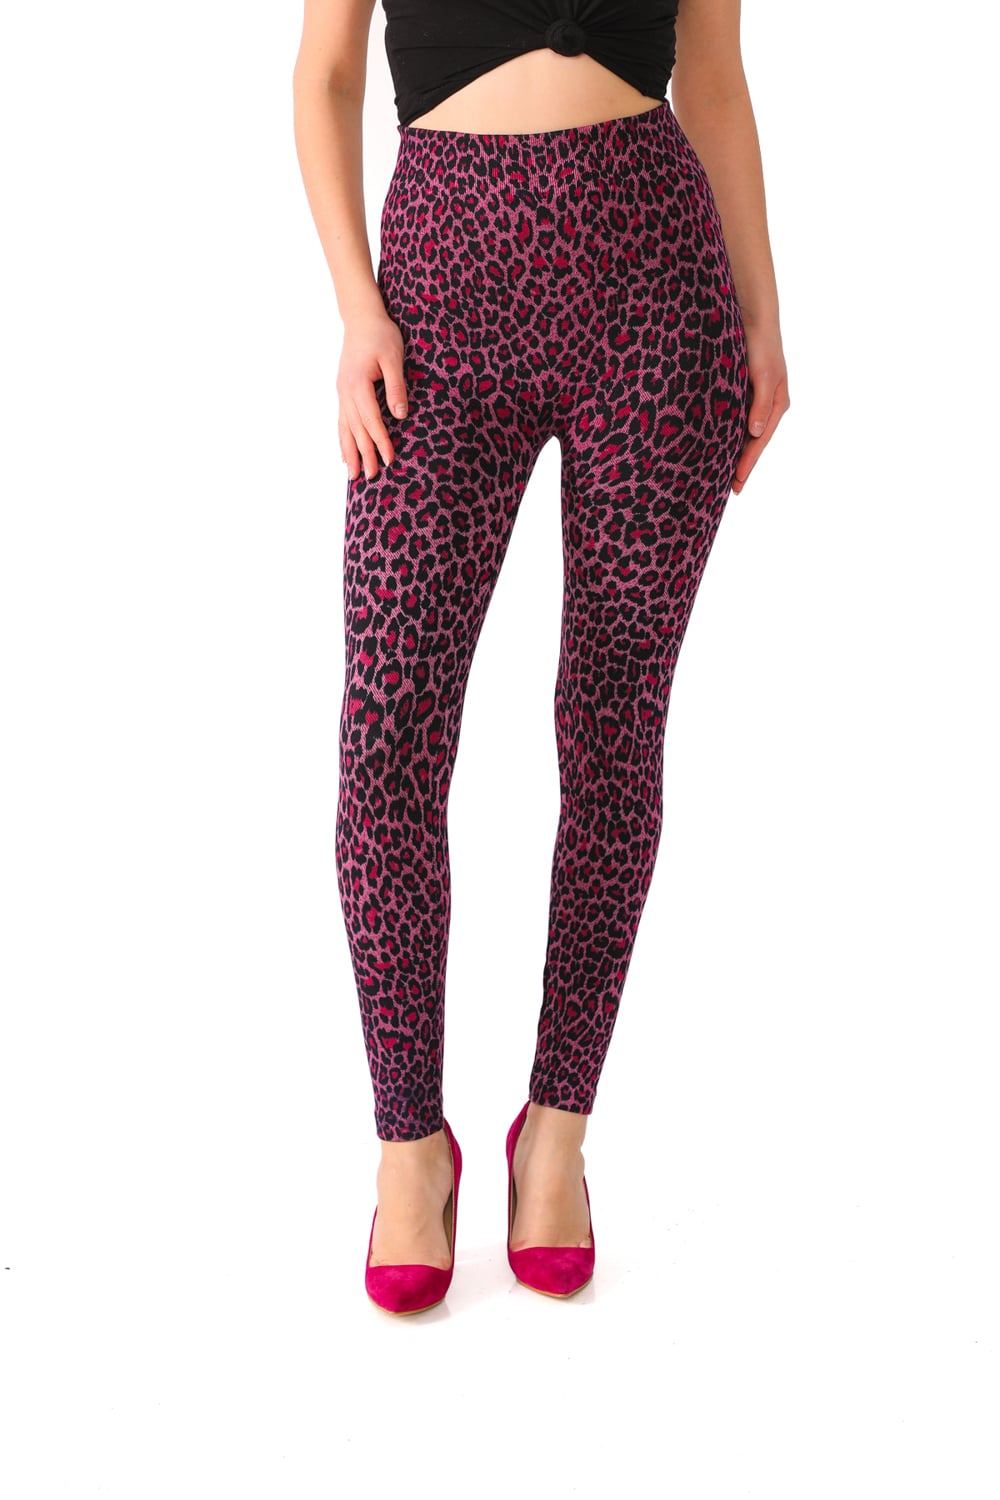 Denim Leggings with Pink Leopard Pattern - 5